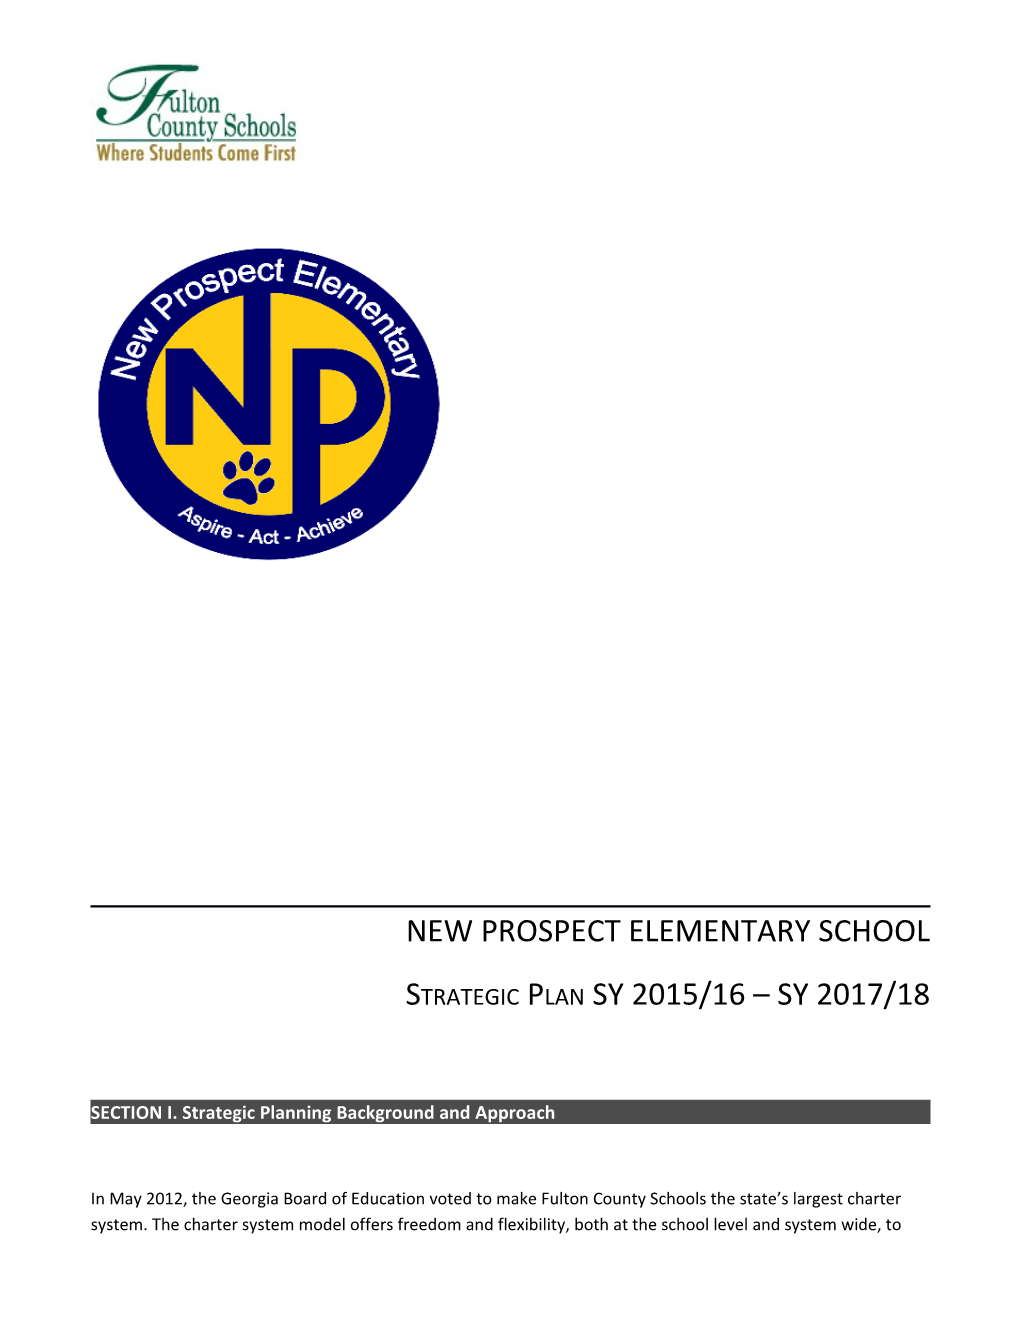 NEW PROSPECT ELEMENTARY SCHOOL Strategic Plan SY 2015/16 2017/18